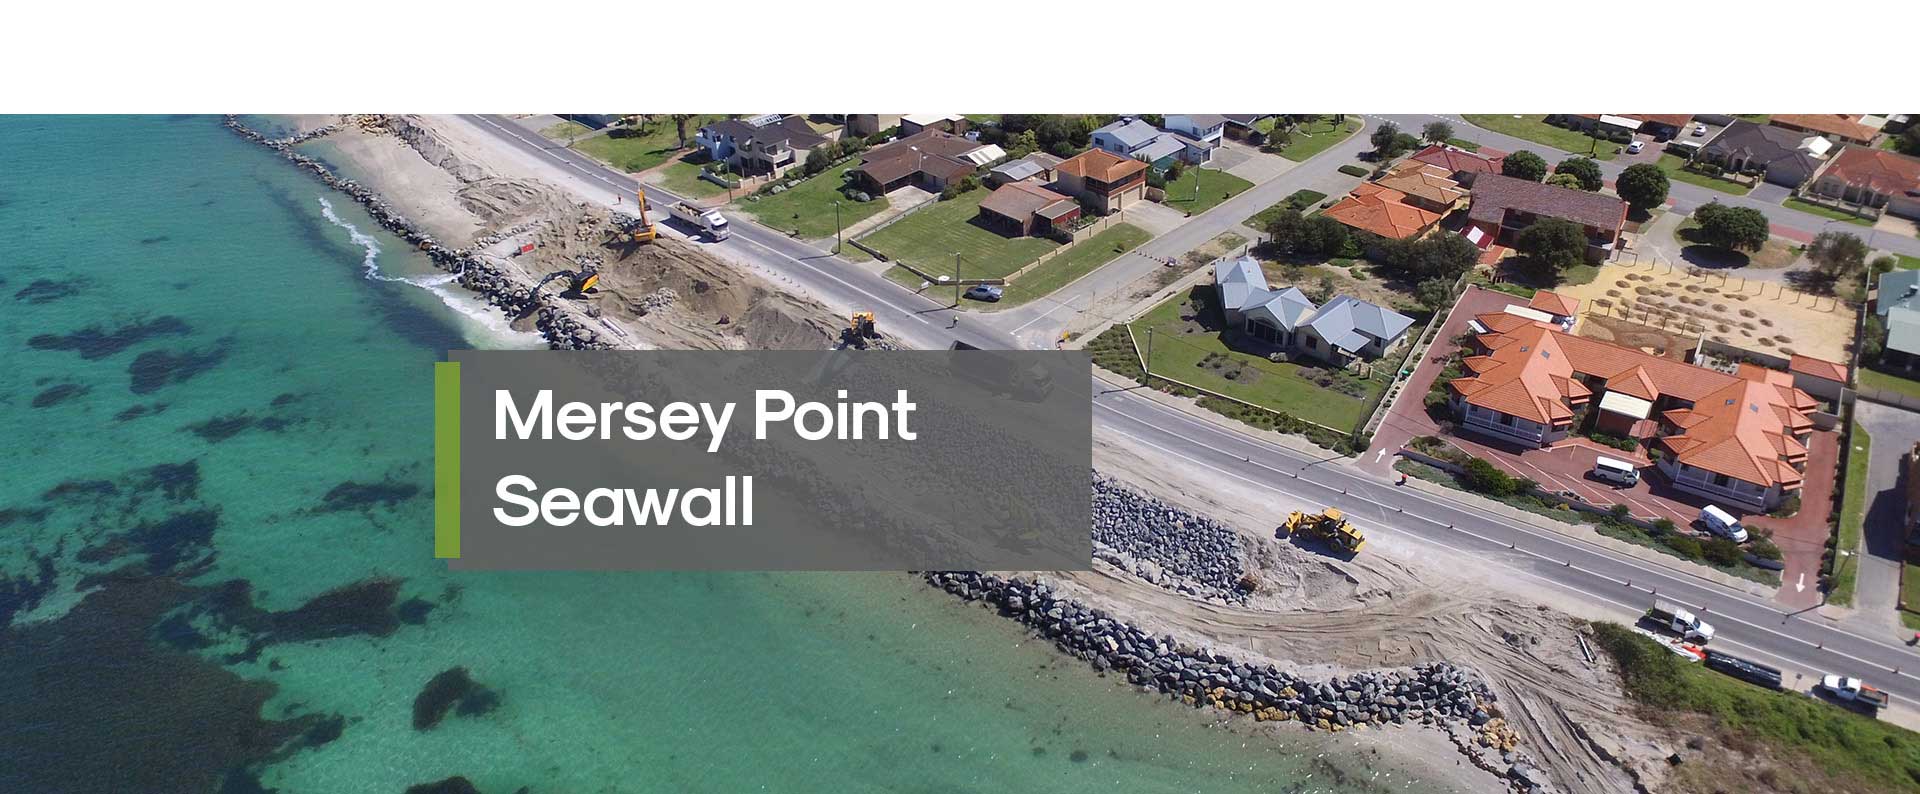 Mersey Point Seawall